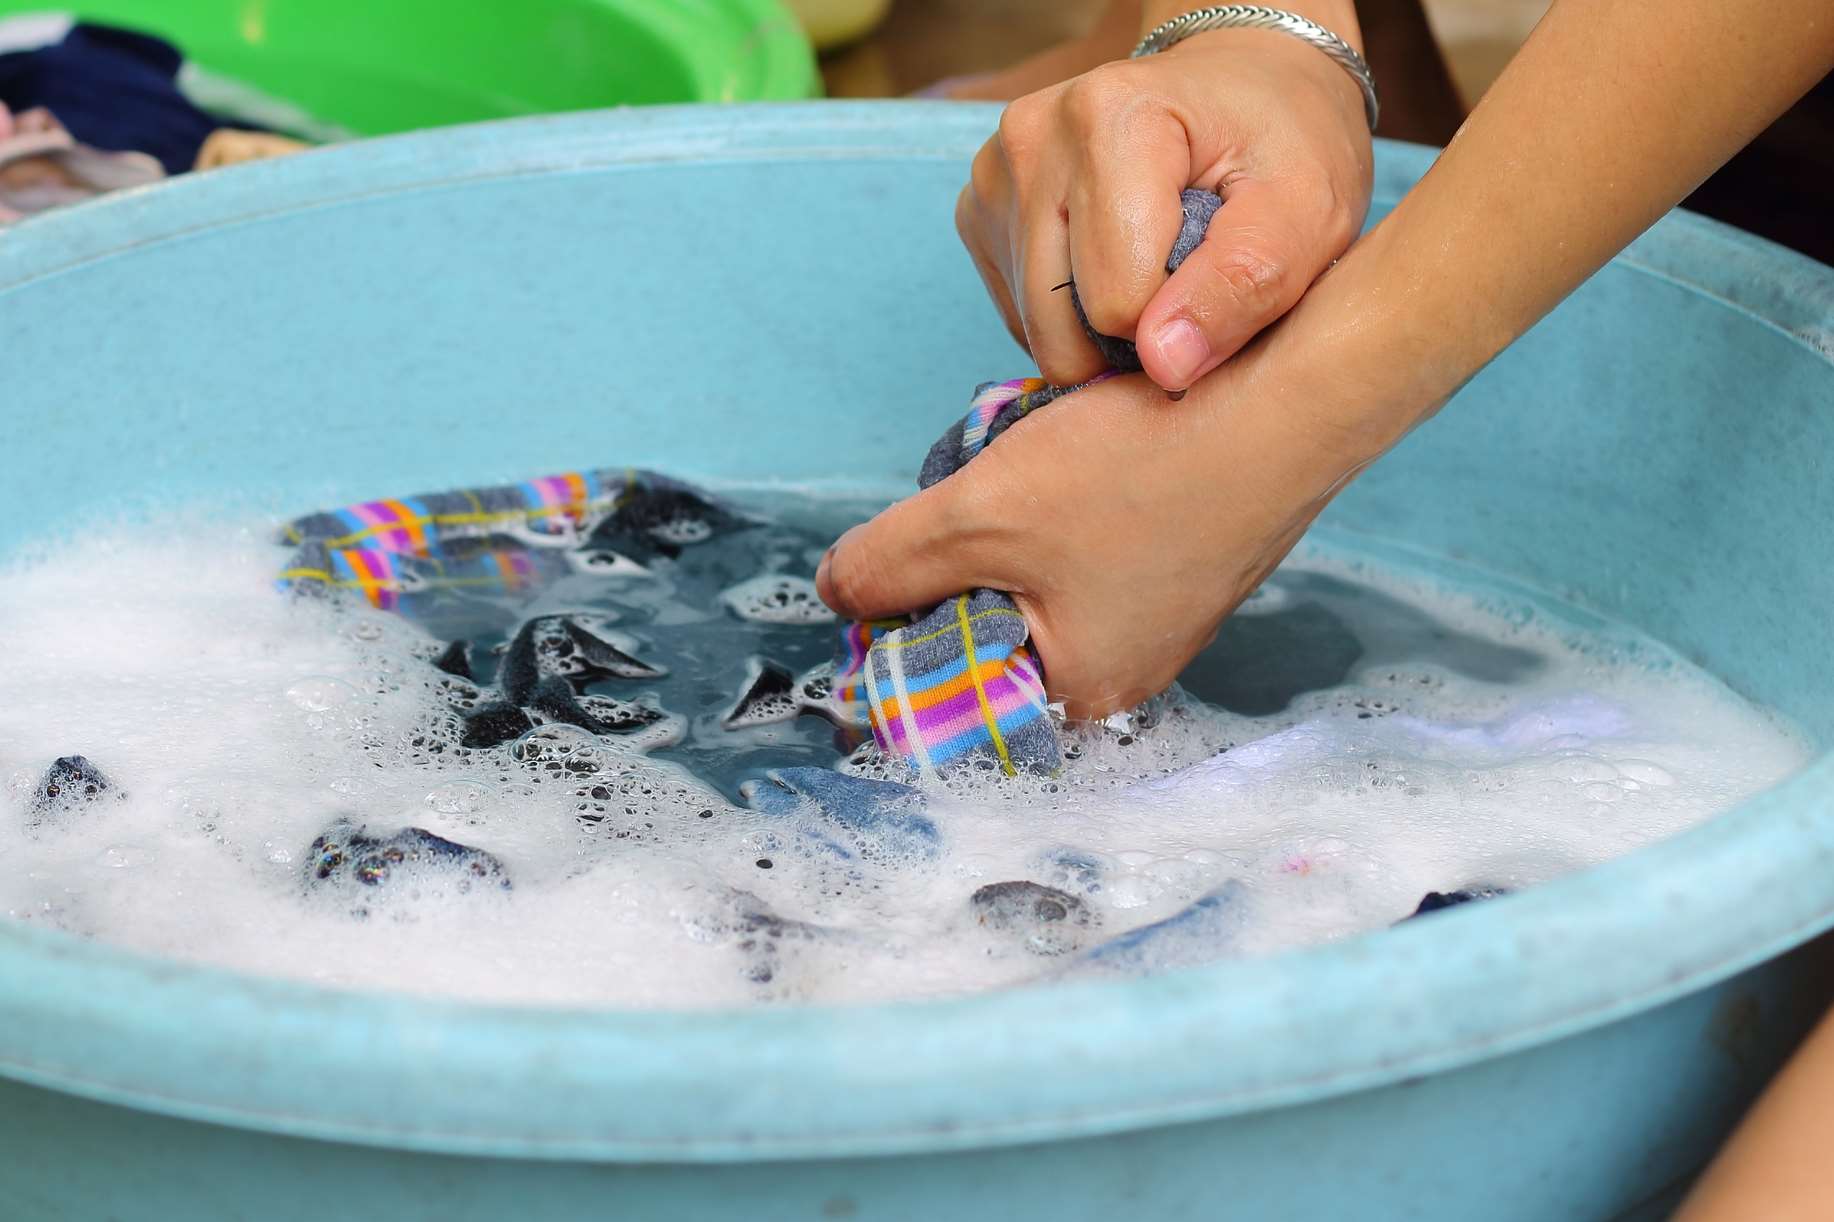 Passing on handwashing skills - really? How hard is it?